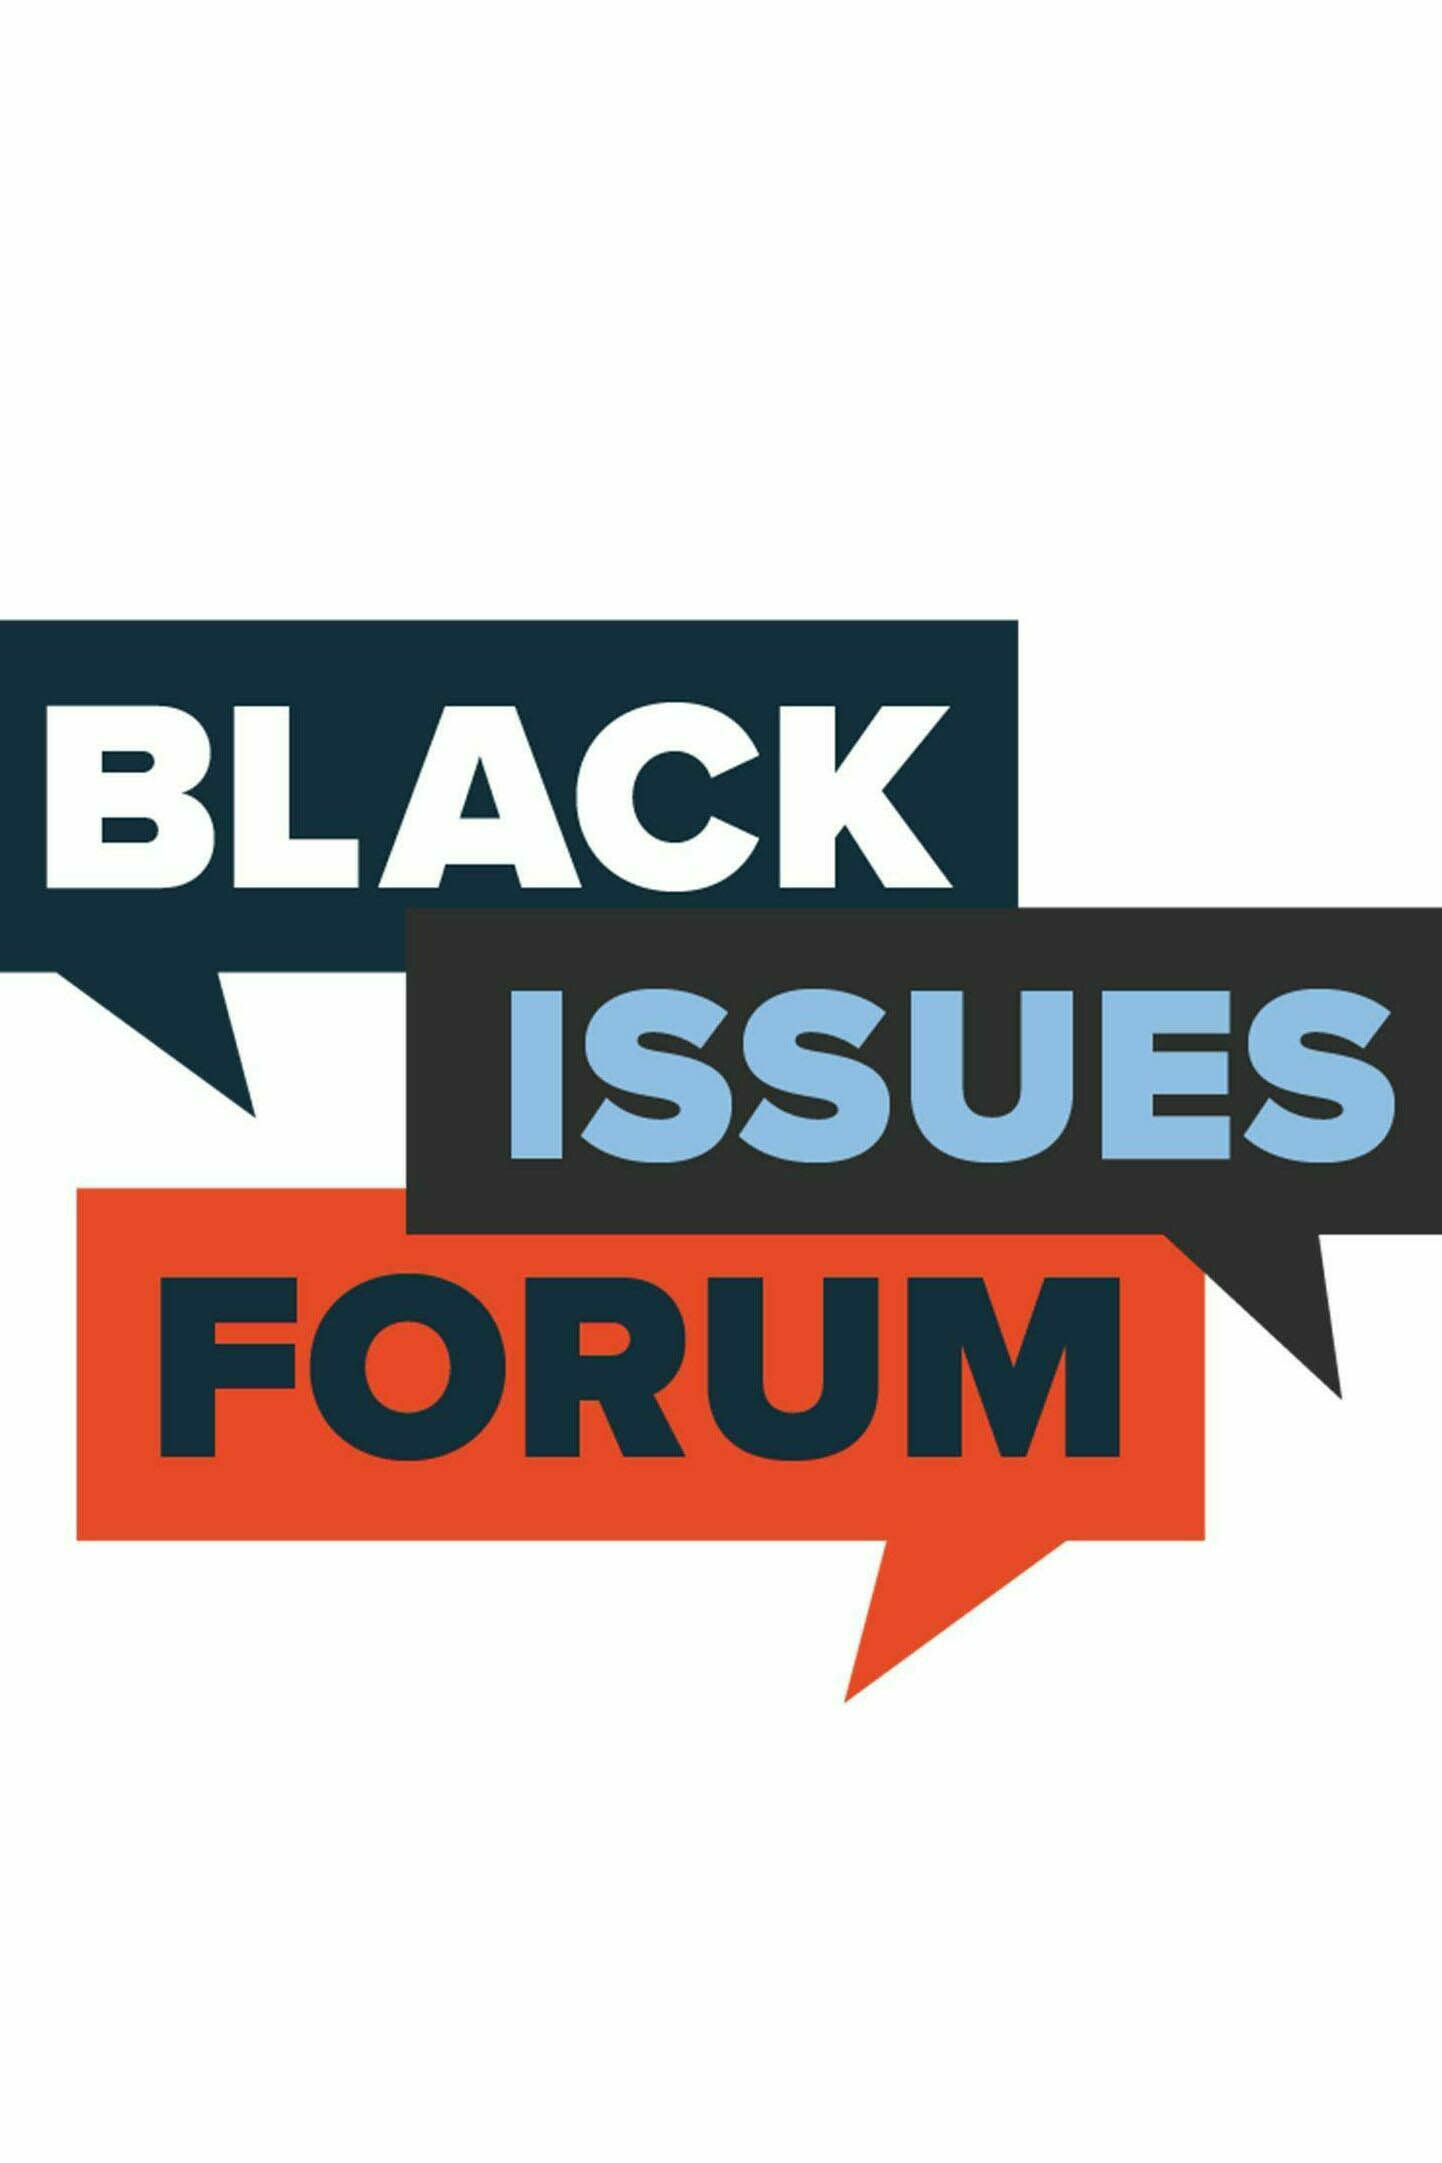 Black issues forum 2x3